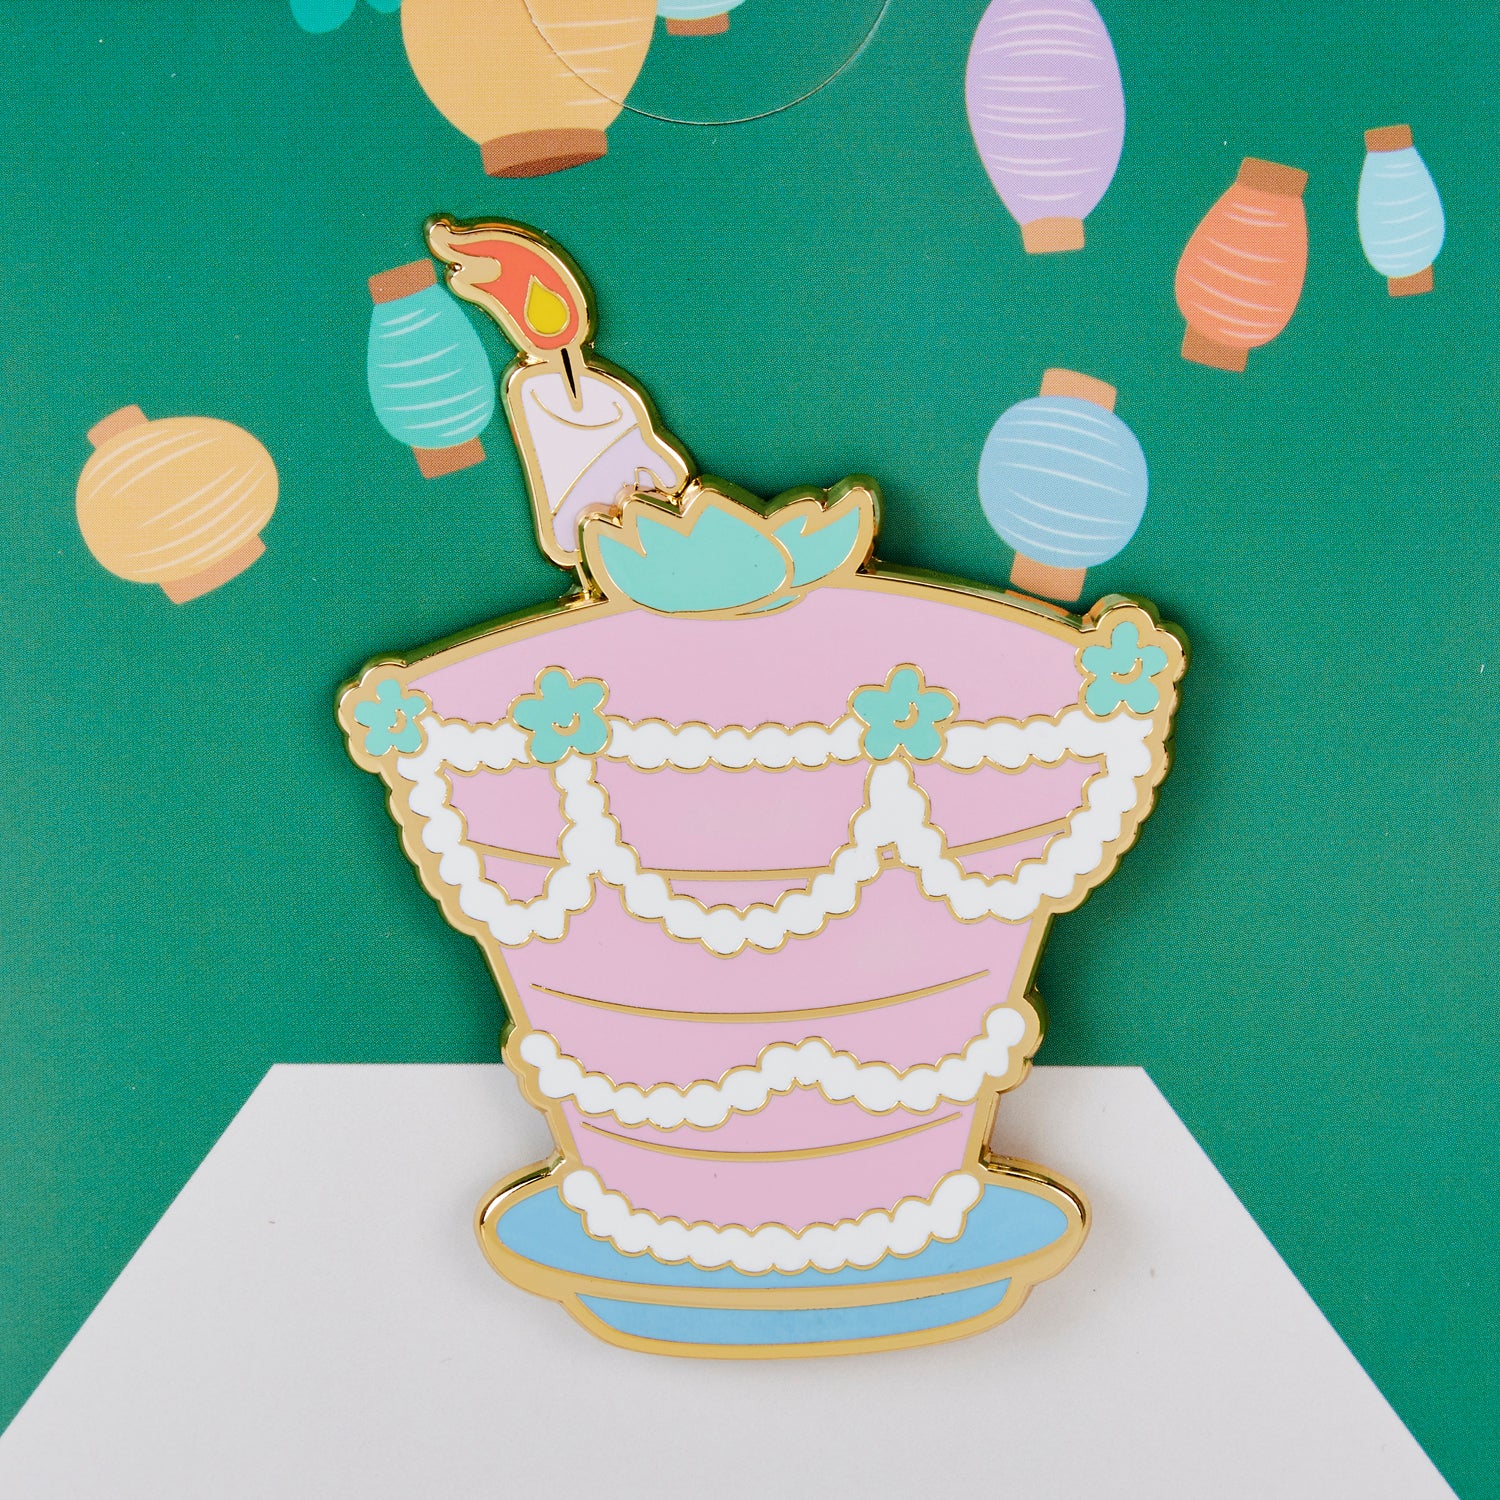 Loungefly x Disney Alice in Wonderland Unbirthday Cake Sliding 3 Inch Pin